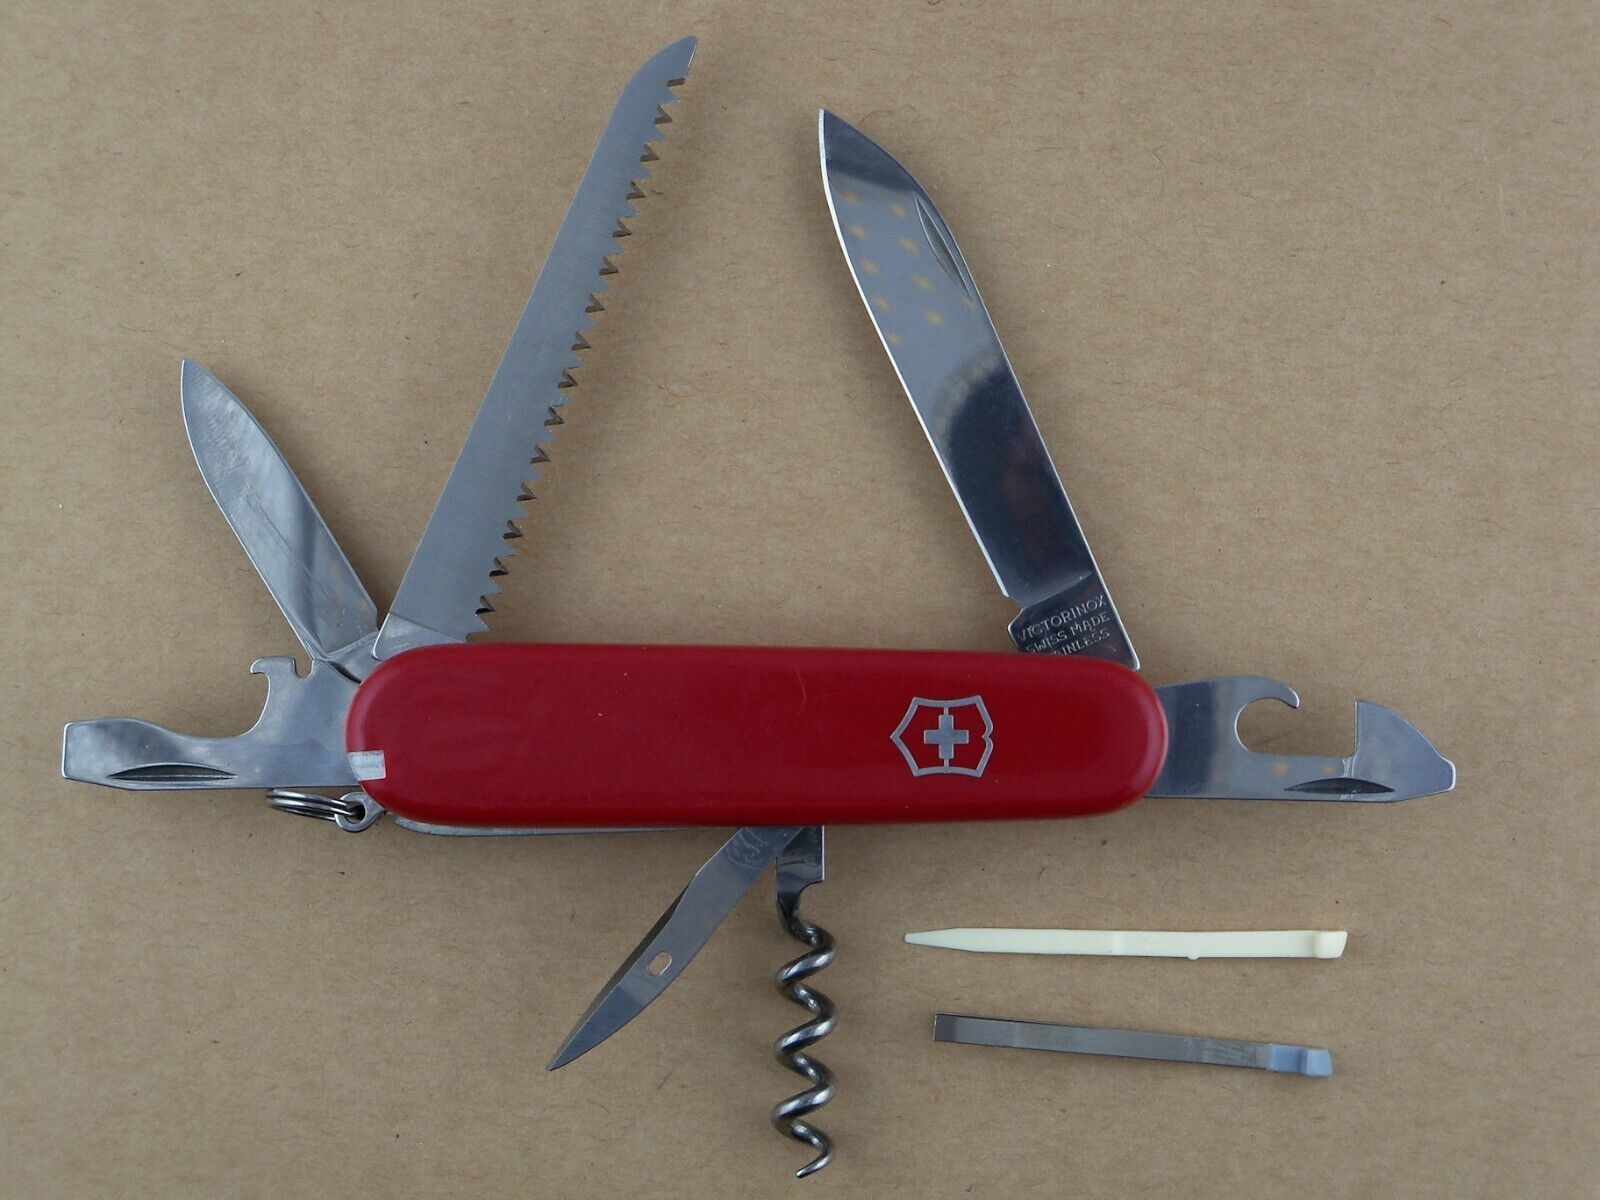 Victorinox Camper Swiss Army Pocket Knife - Red - Wood Saw Corkscrew - Very Good